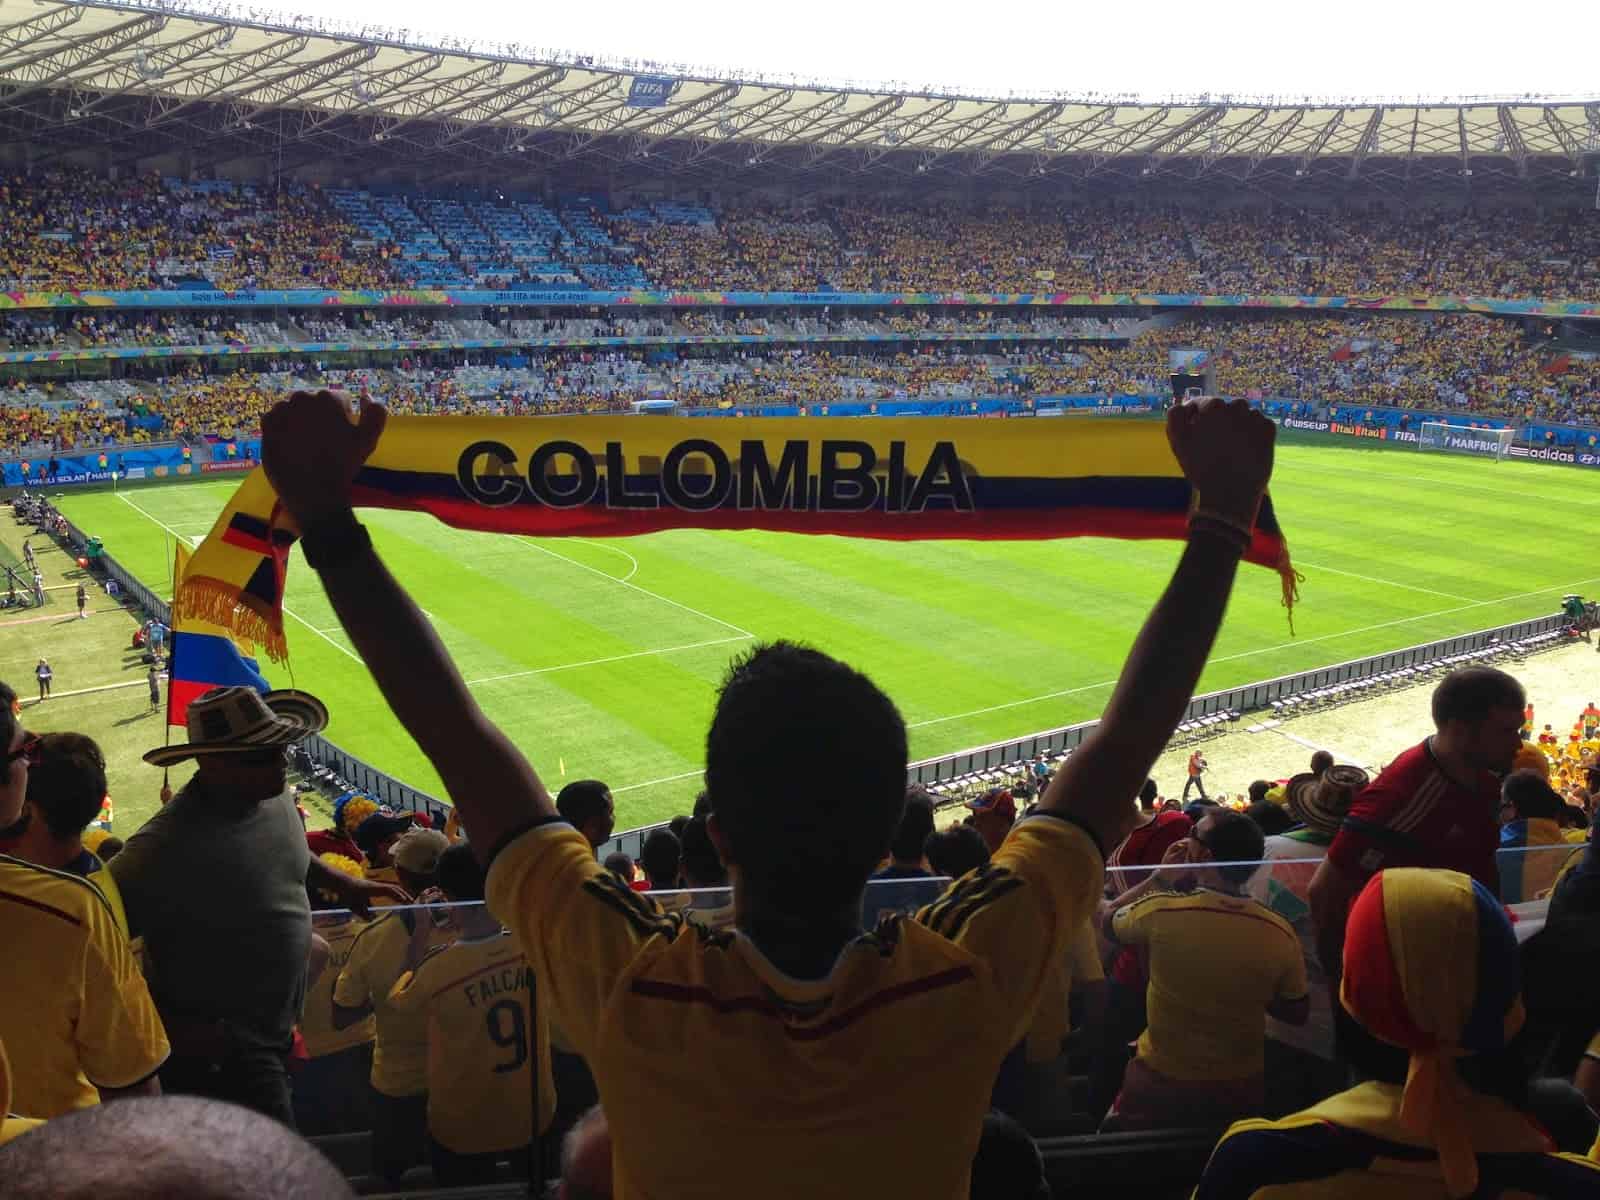 Greece vs Colombia 2014 World Cup at Estádio Mineirão in Belo Horizonte, Brazil